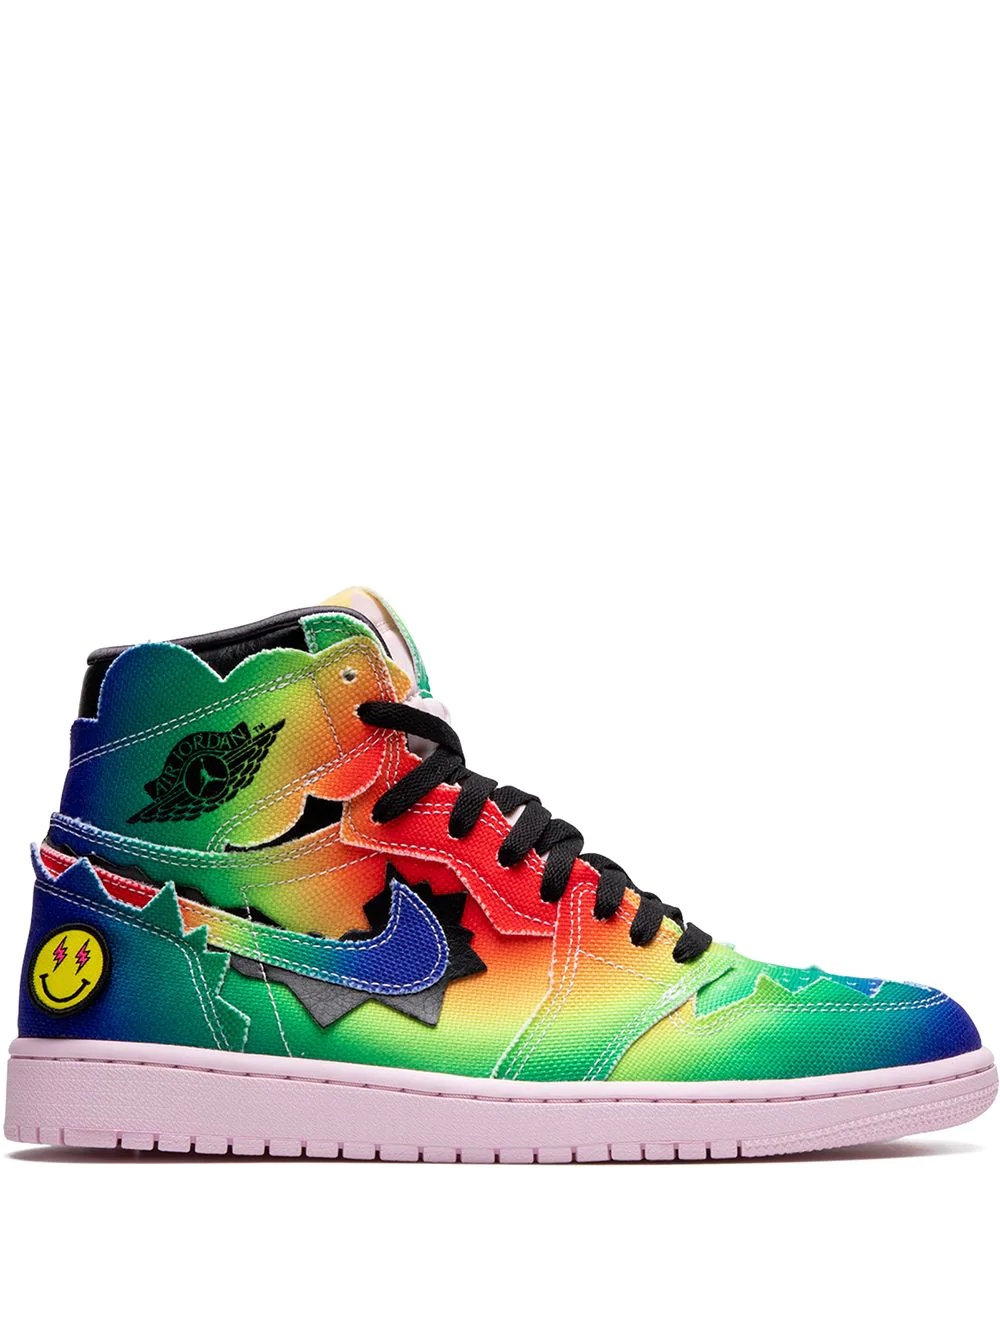 Air Jordan 1 Retro High J. Balvin "Colores y Vibras" sneakers - 1